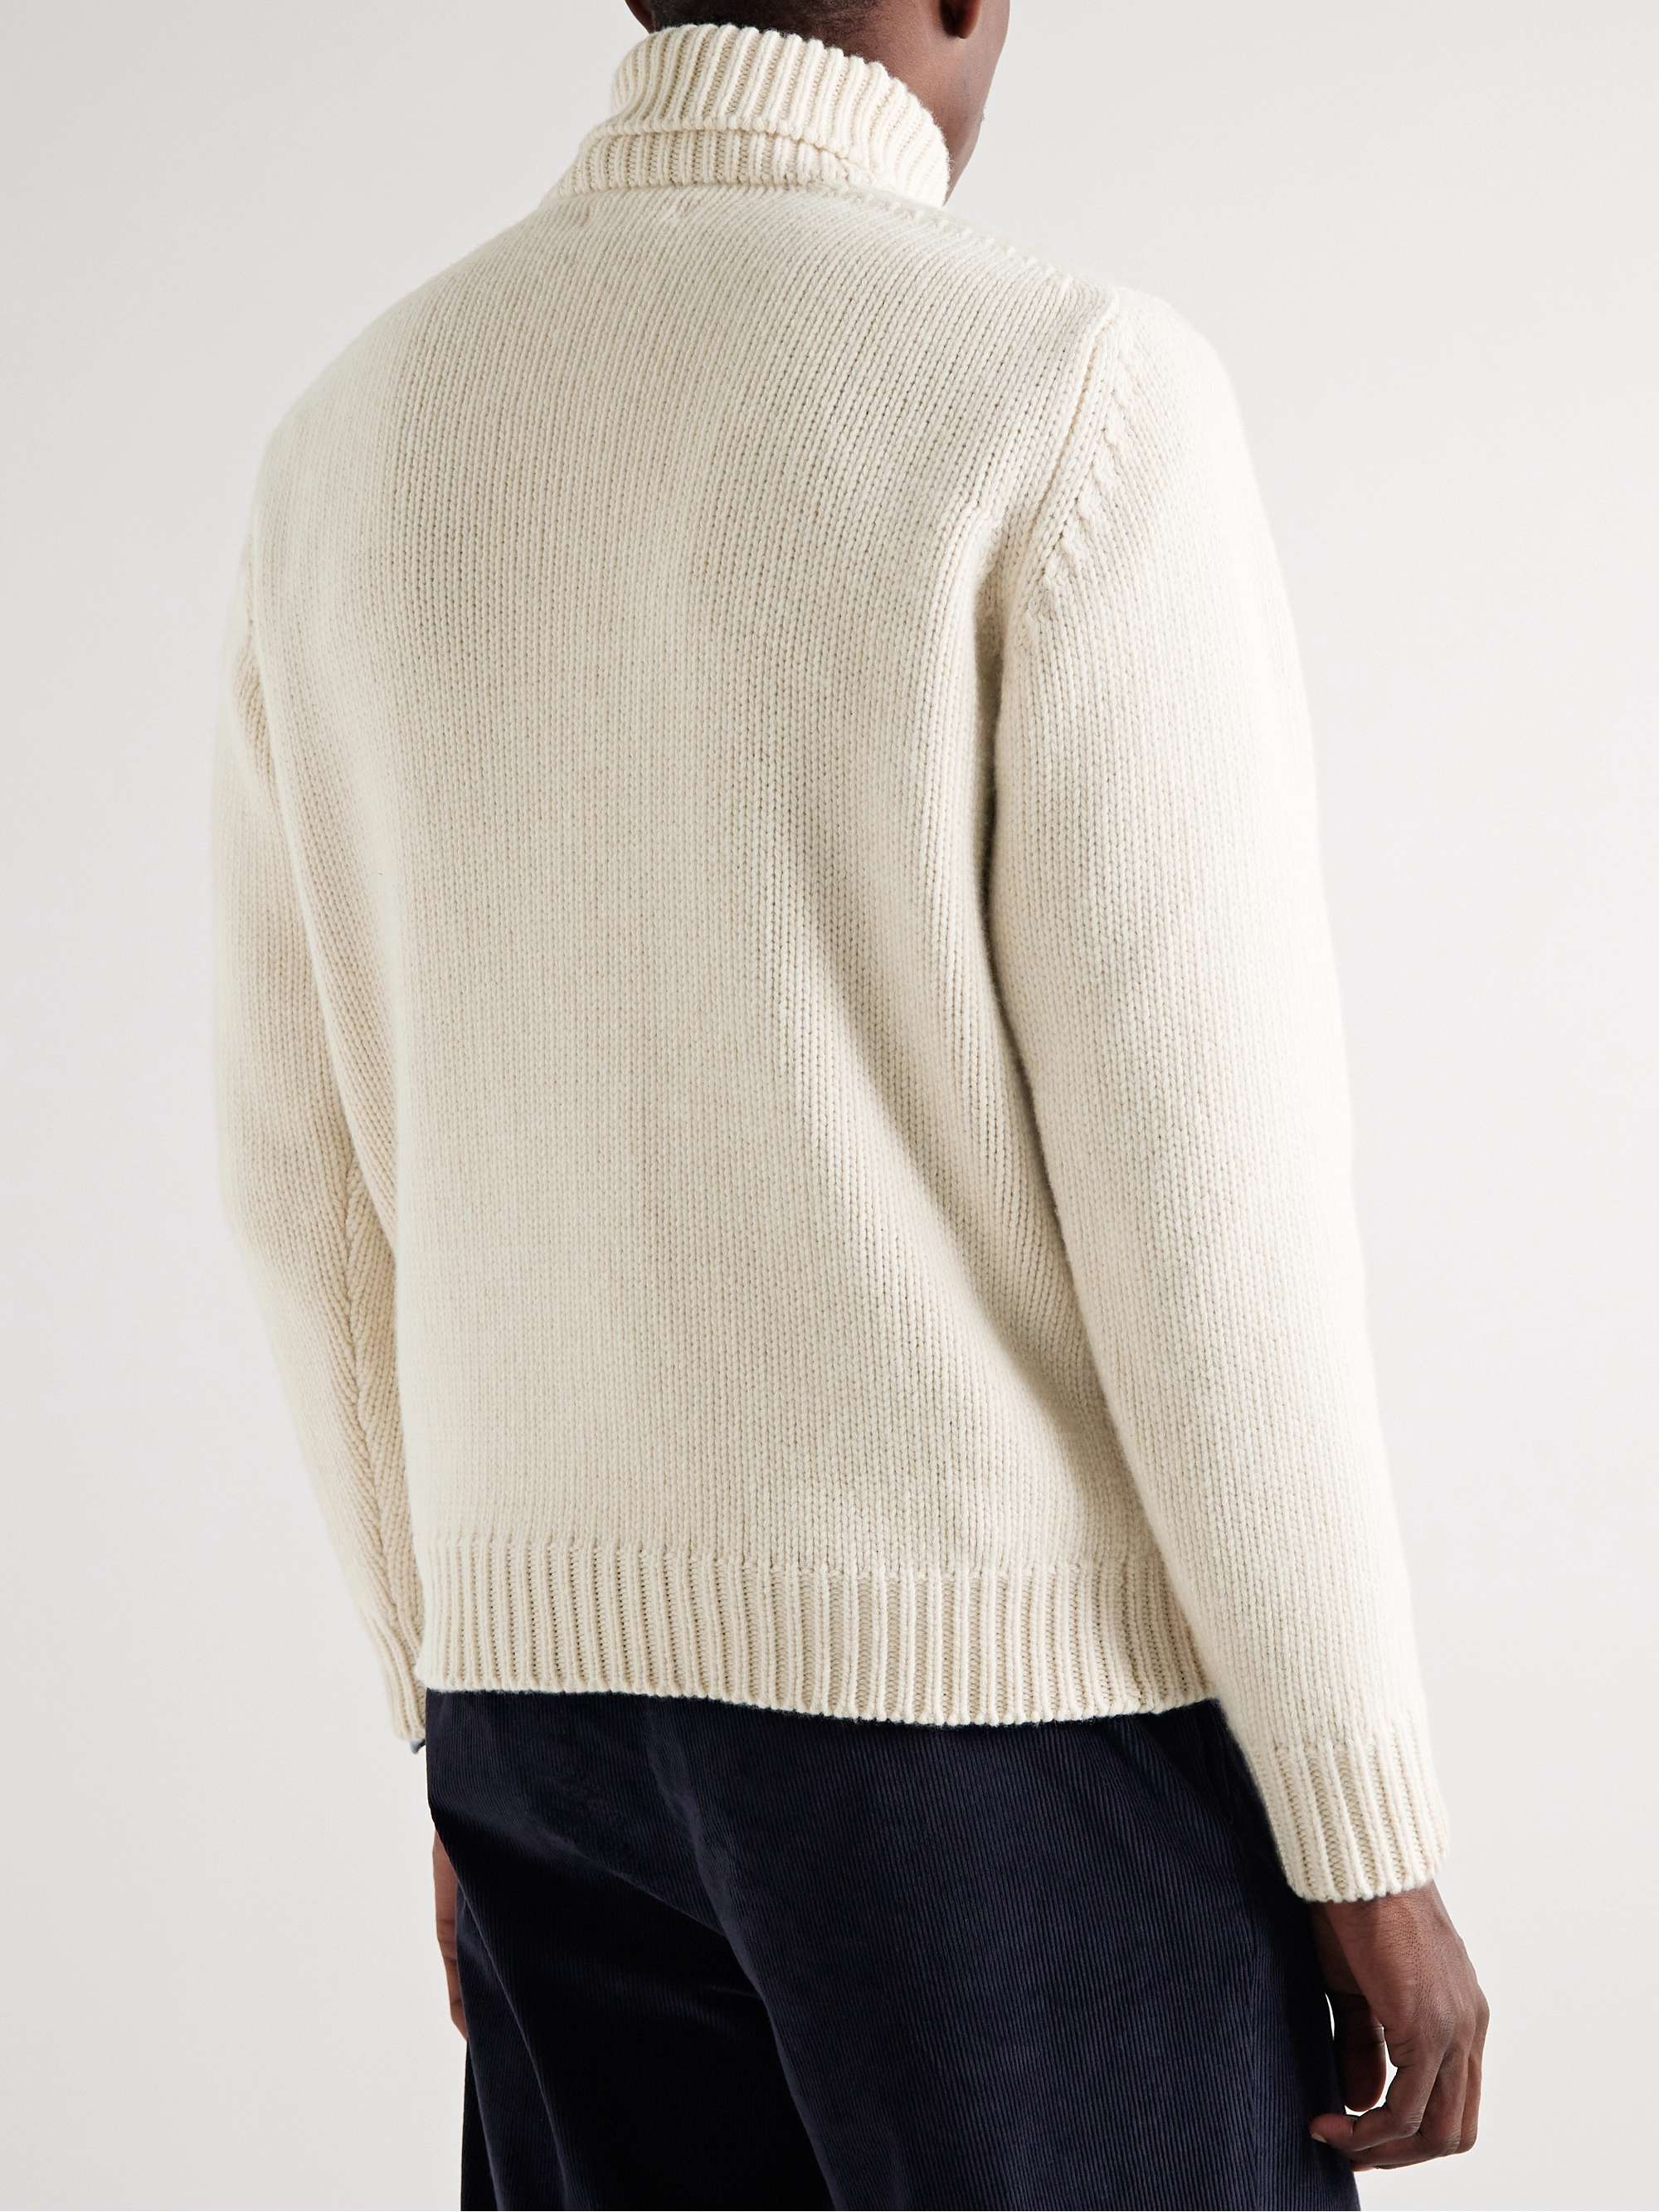 RICHARD JAMES Wool Rollneck Sweater for Men | MR PORTER